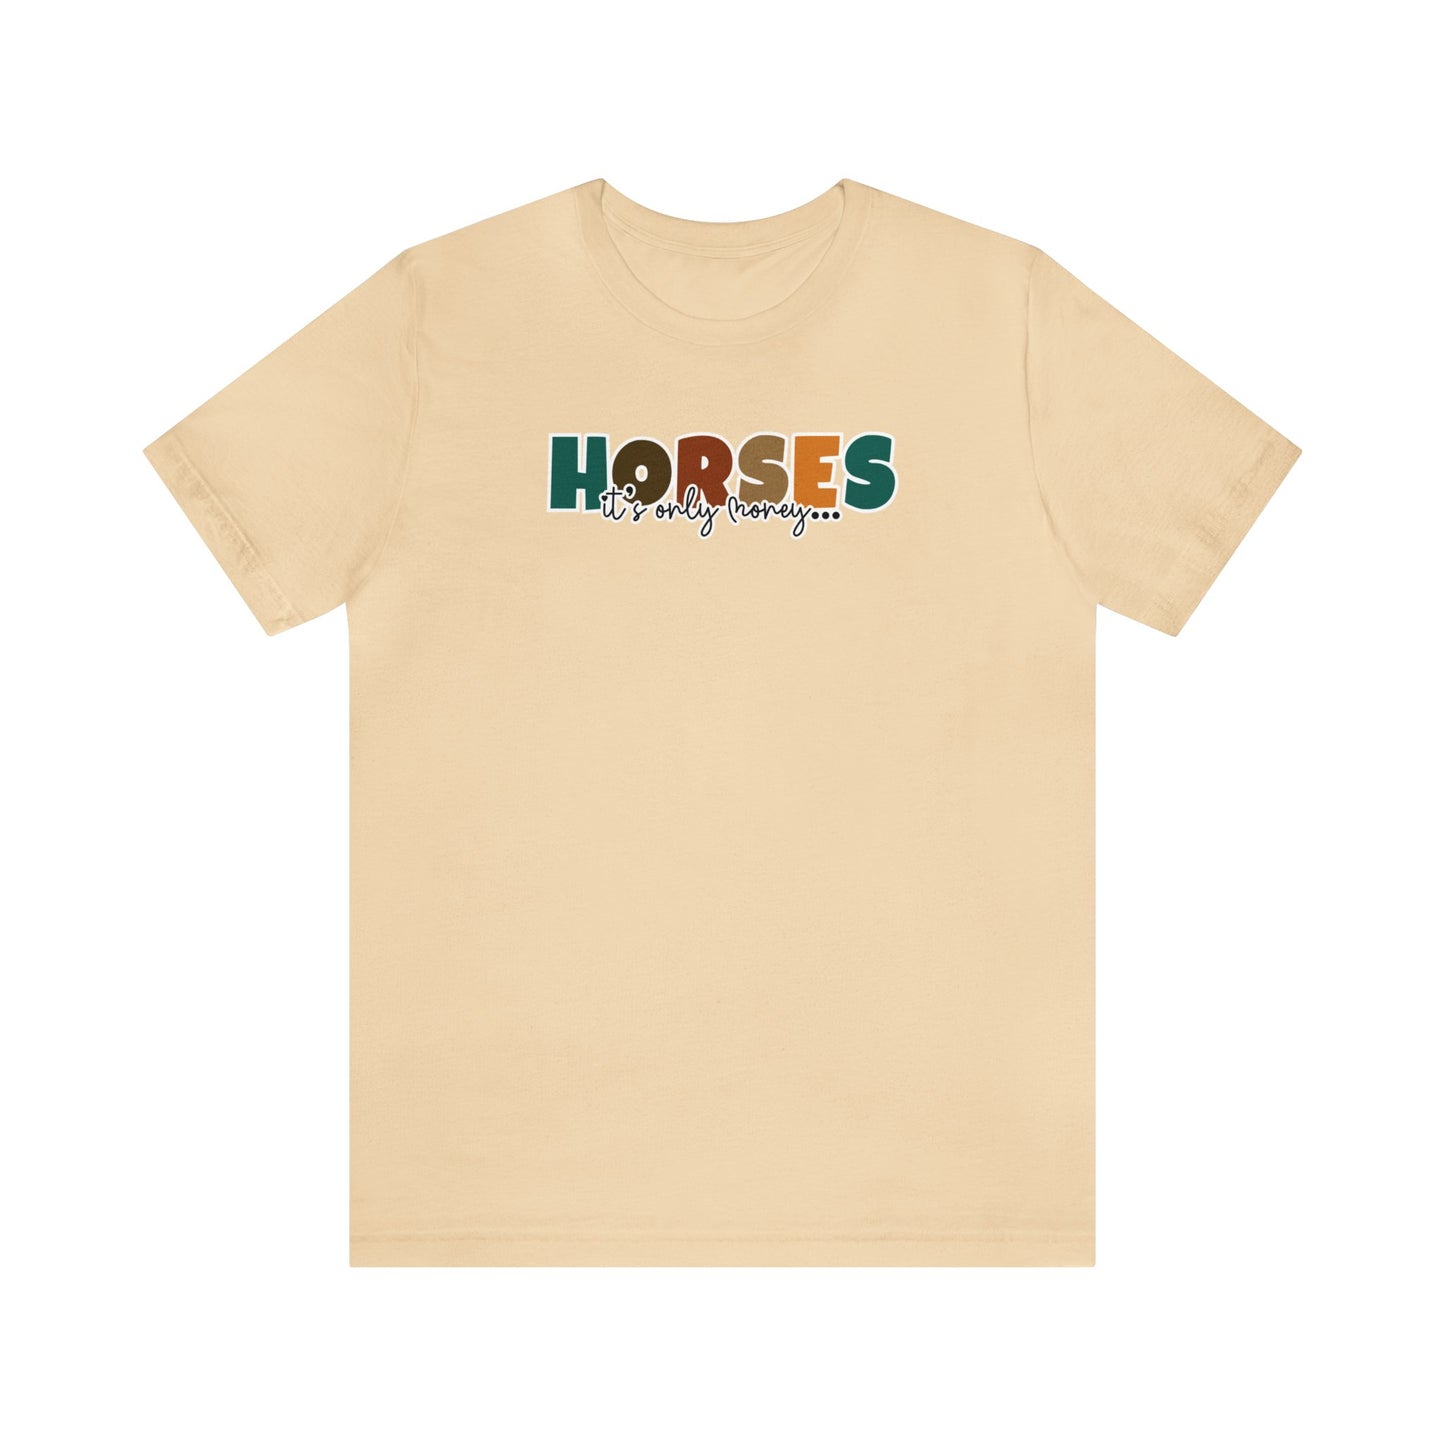 Horses, It's Only Money - equestrian humor tee